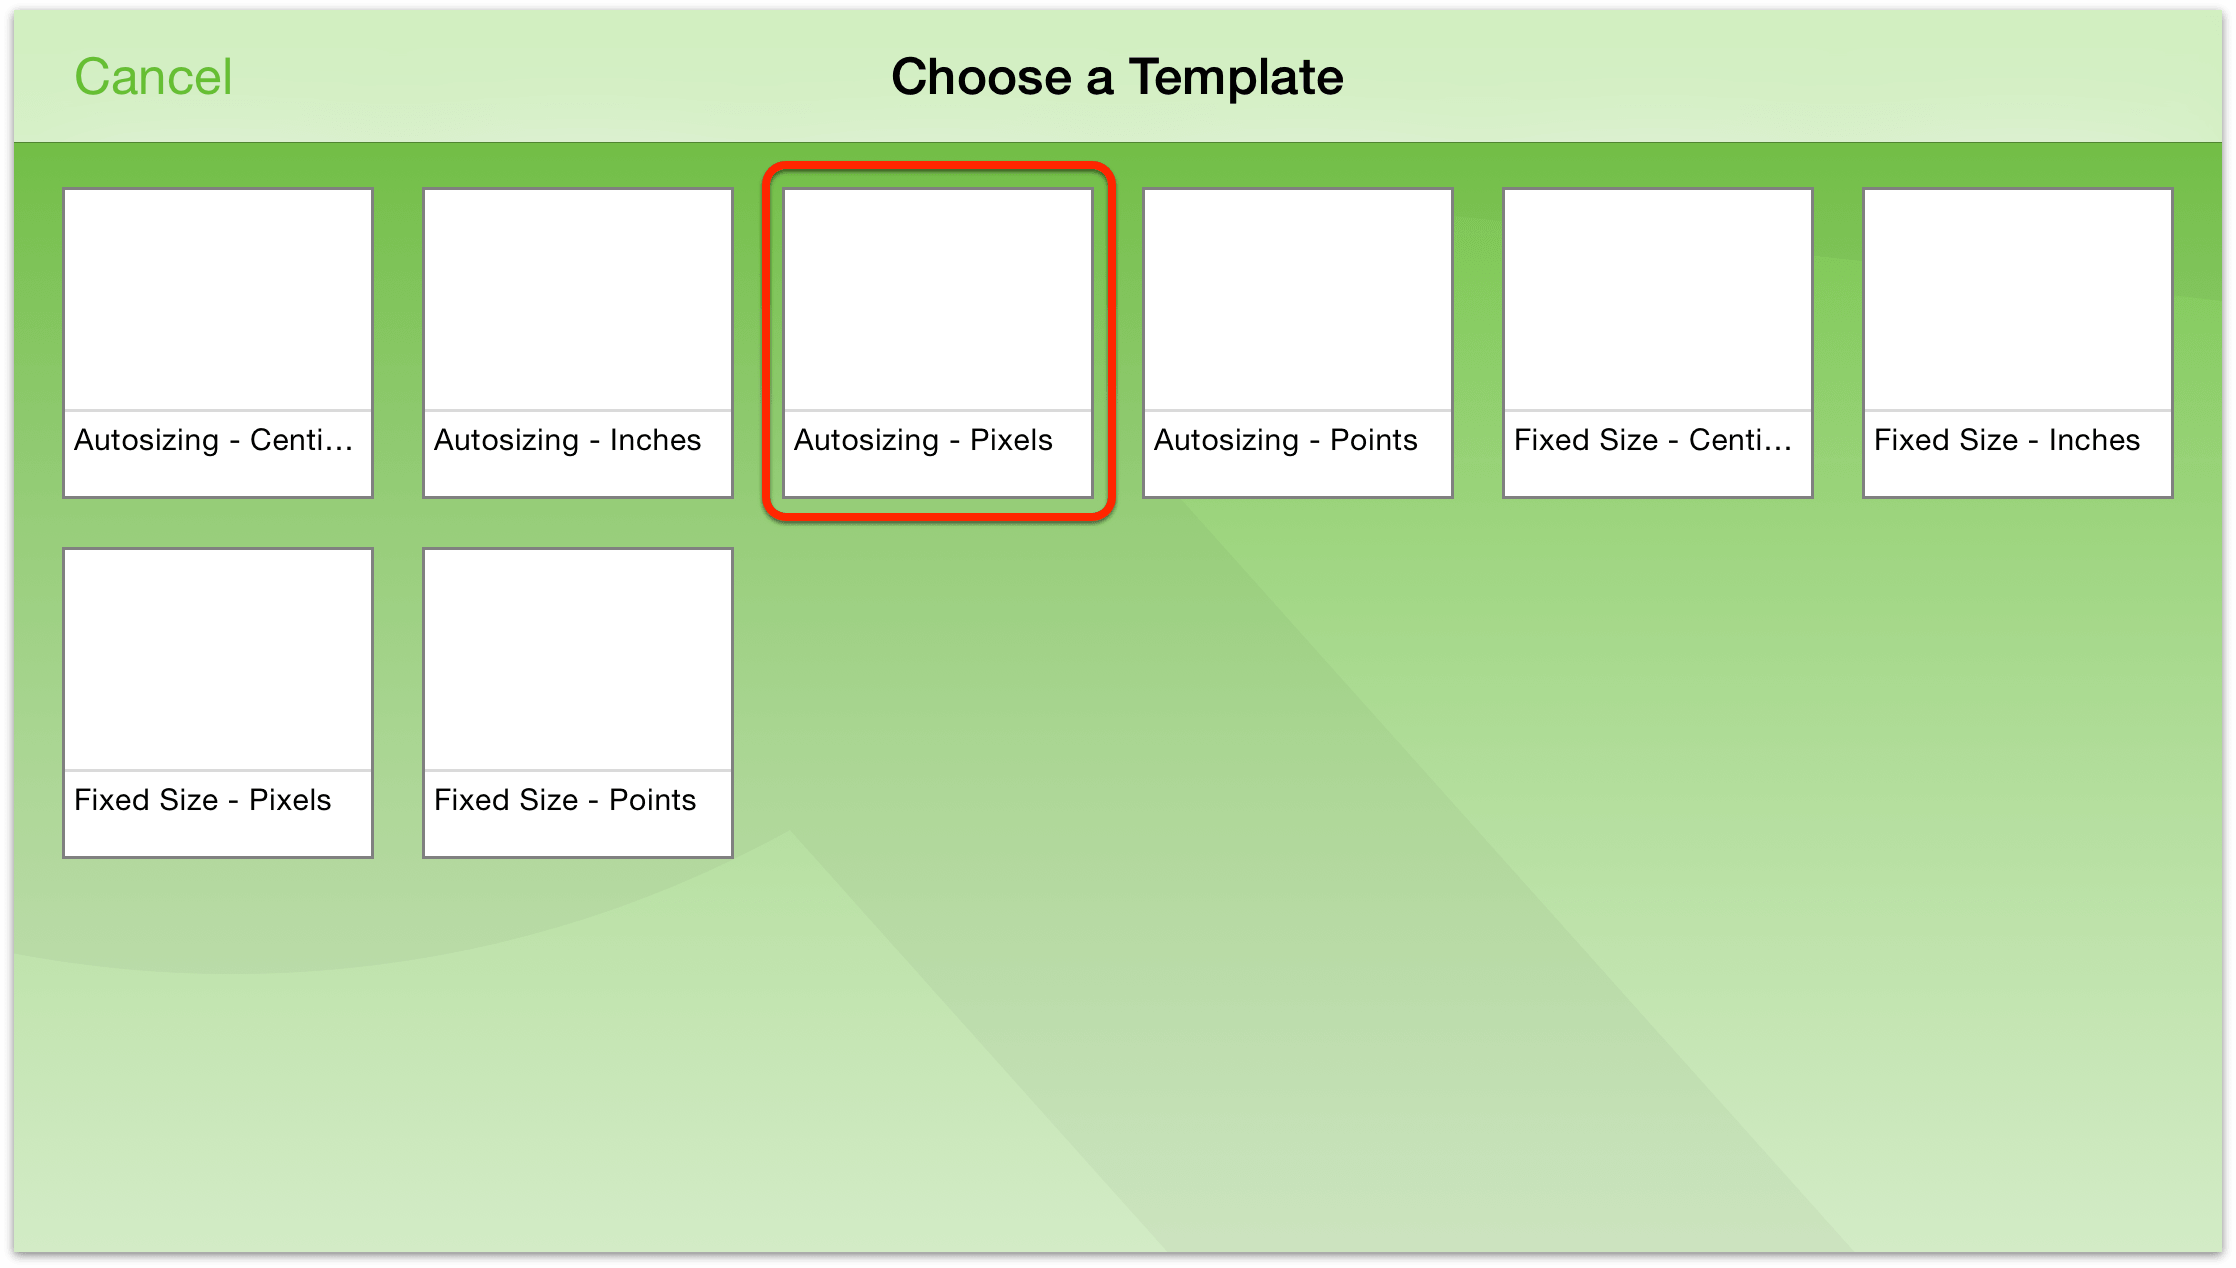 Choose a template